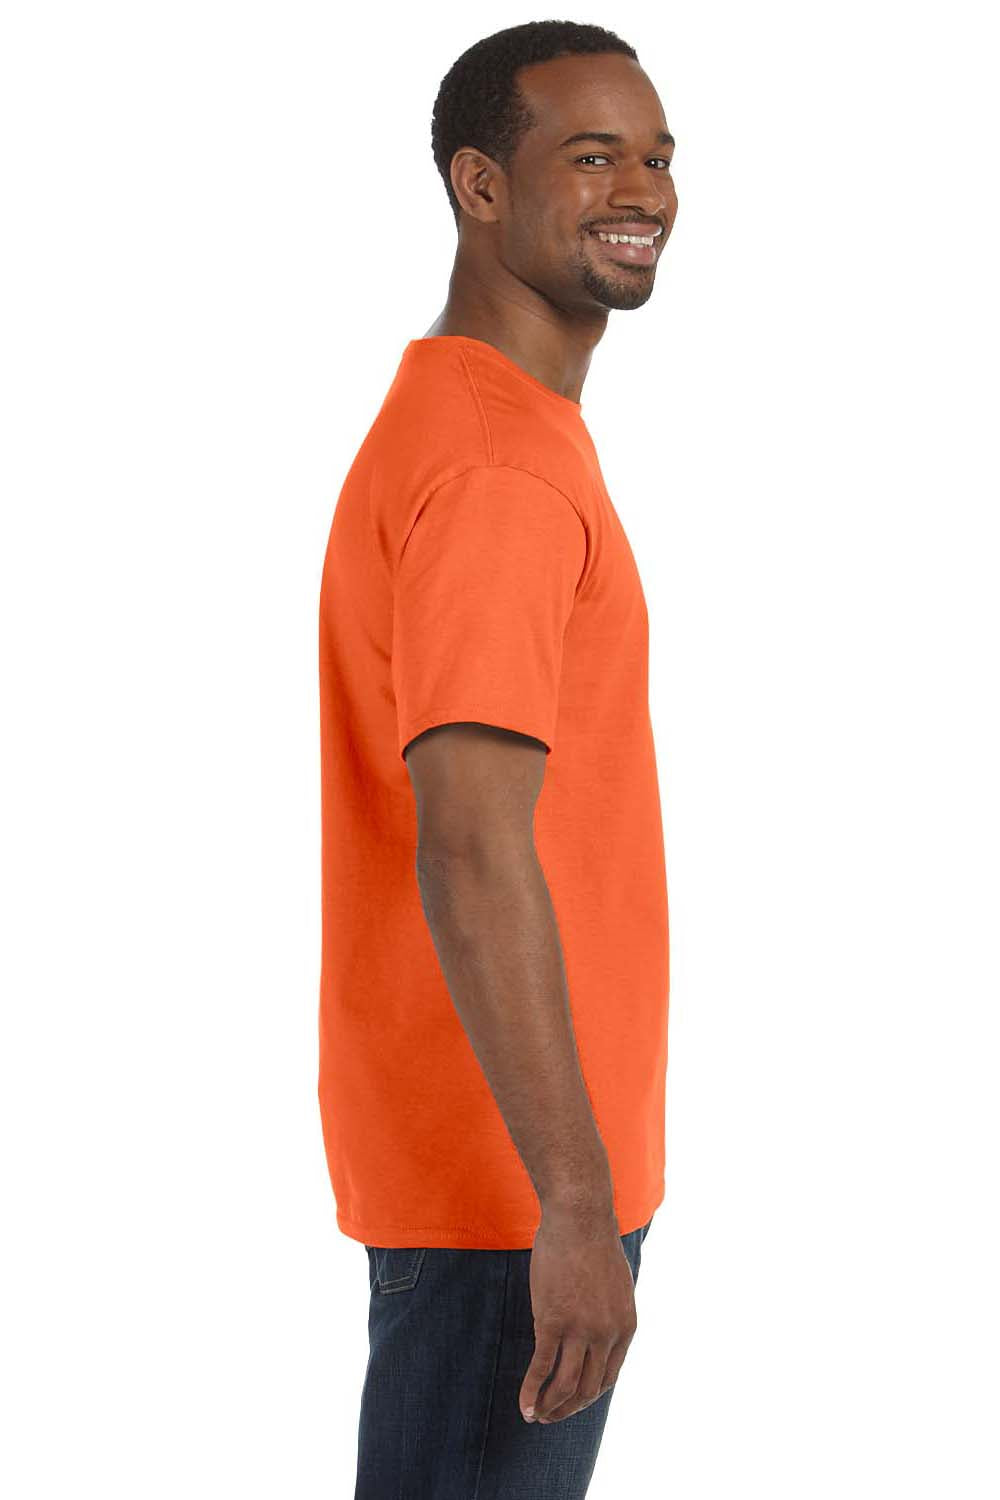 Hanes 5250T Mens ComfortSoft Short Sleeve Crewneck T-Shirt Athletic Orange Side